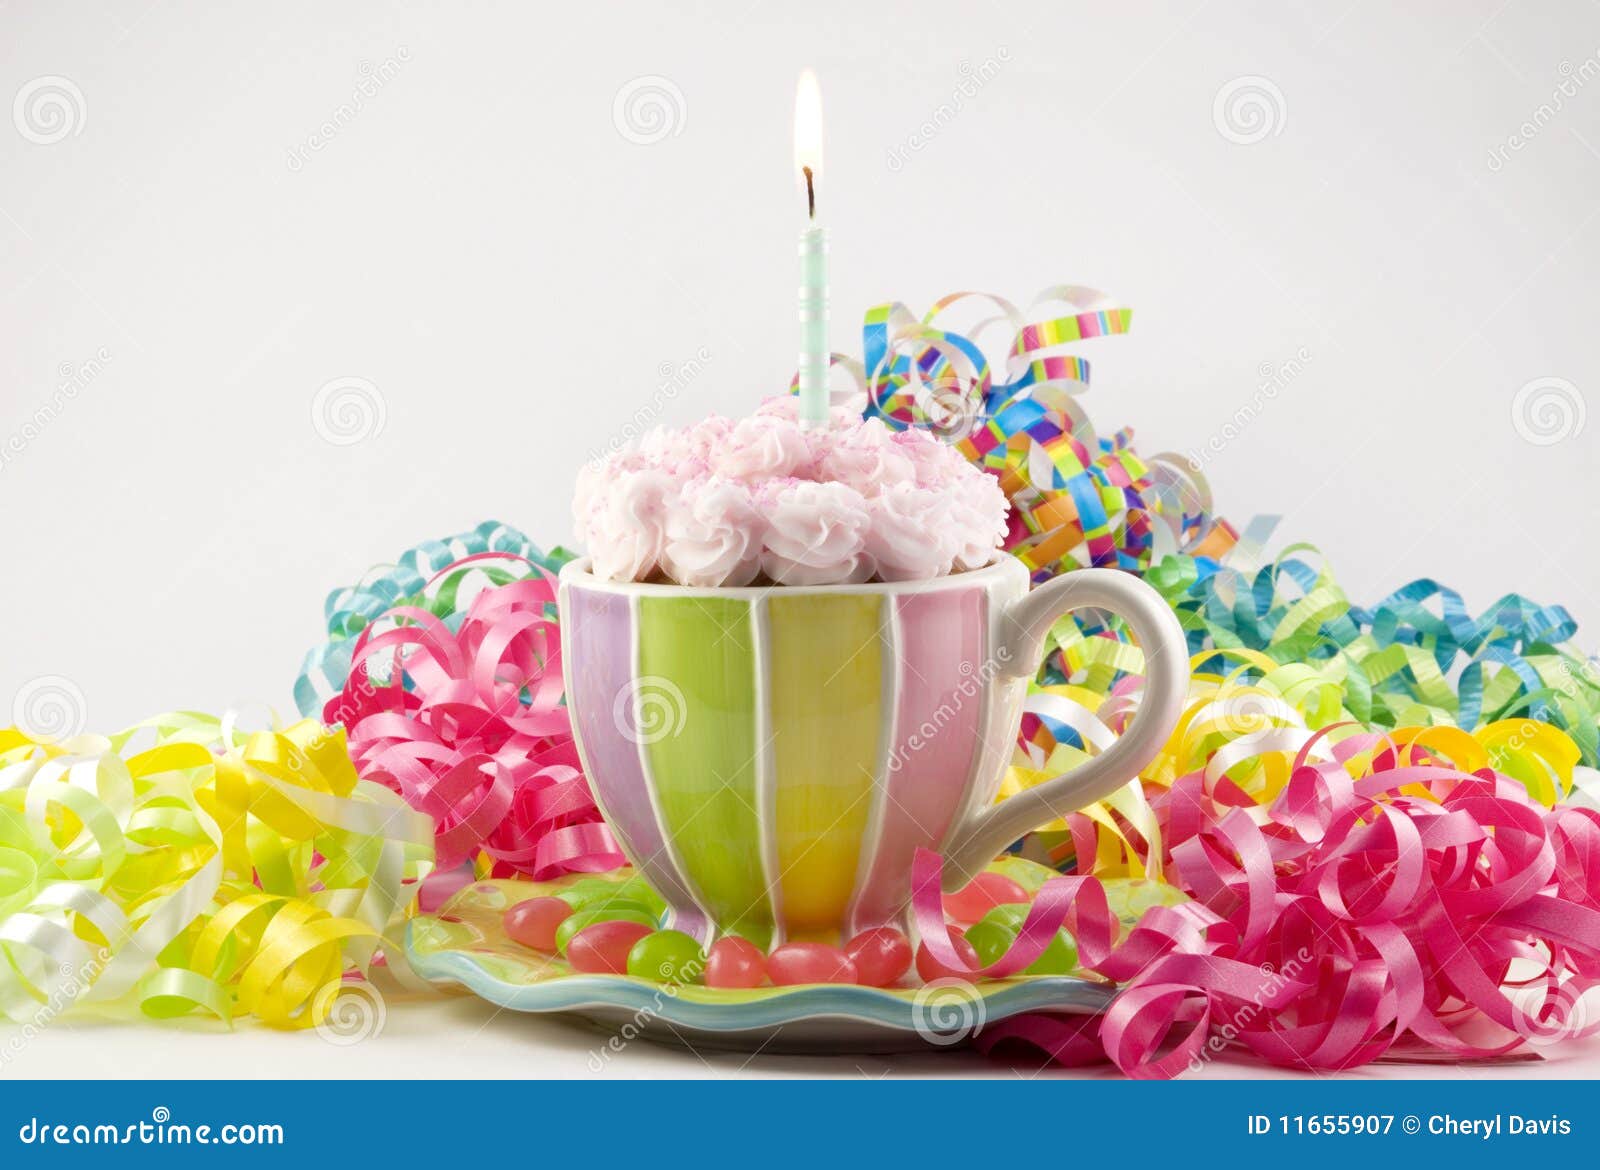 birthday cupcake in teacup